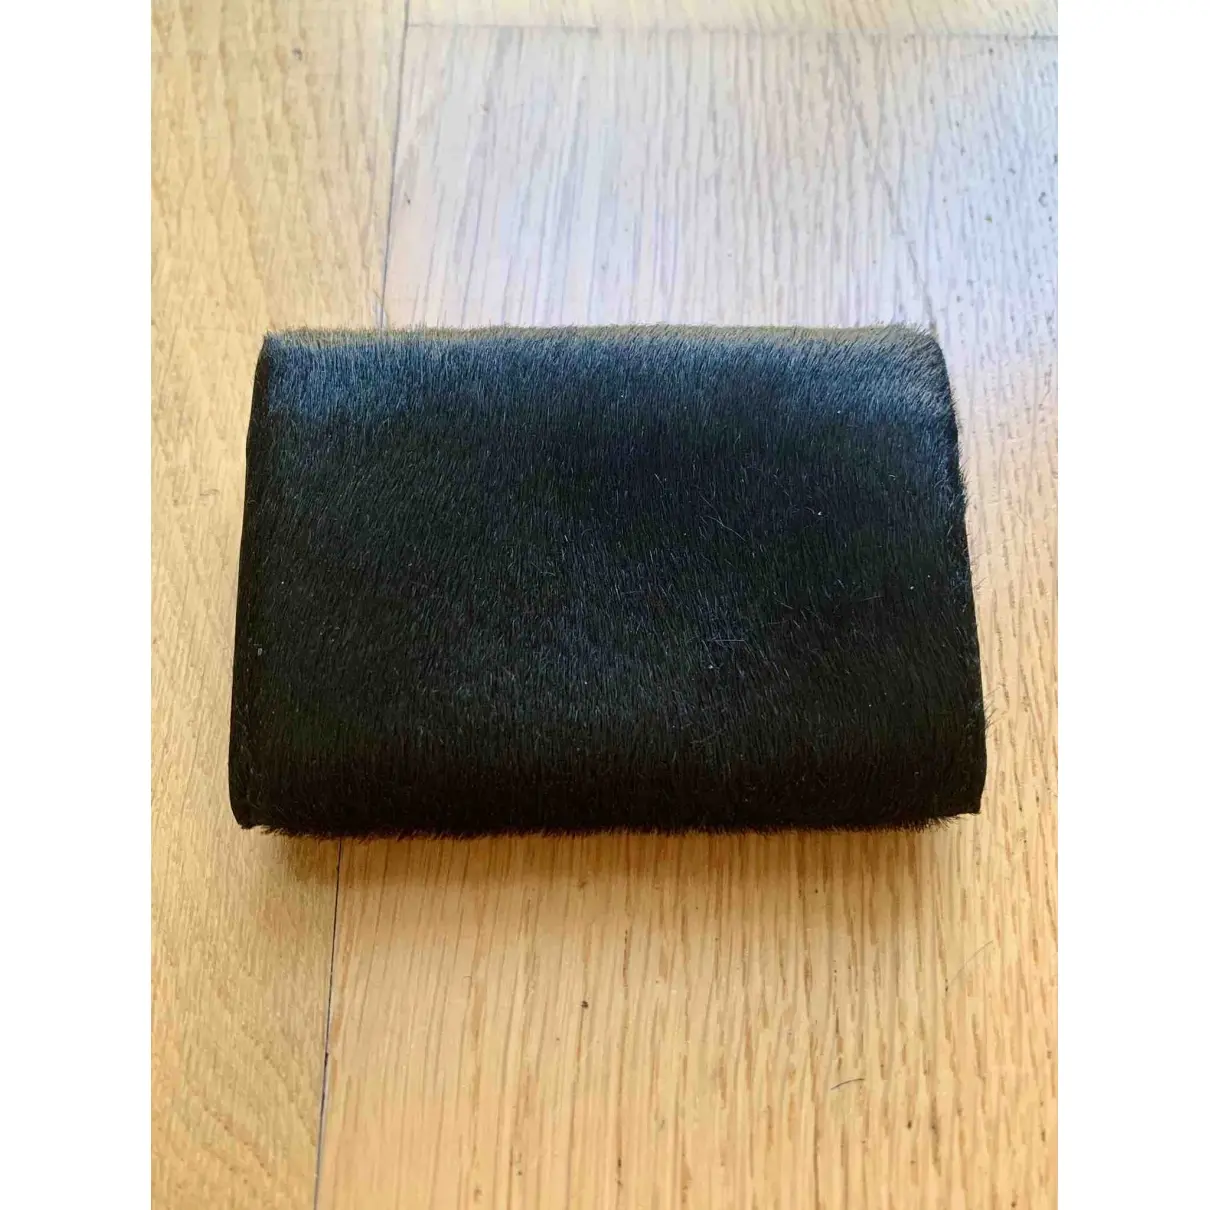 Swarovski Leather purse for sale